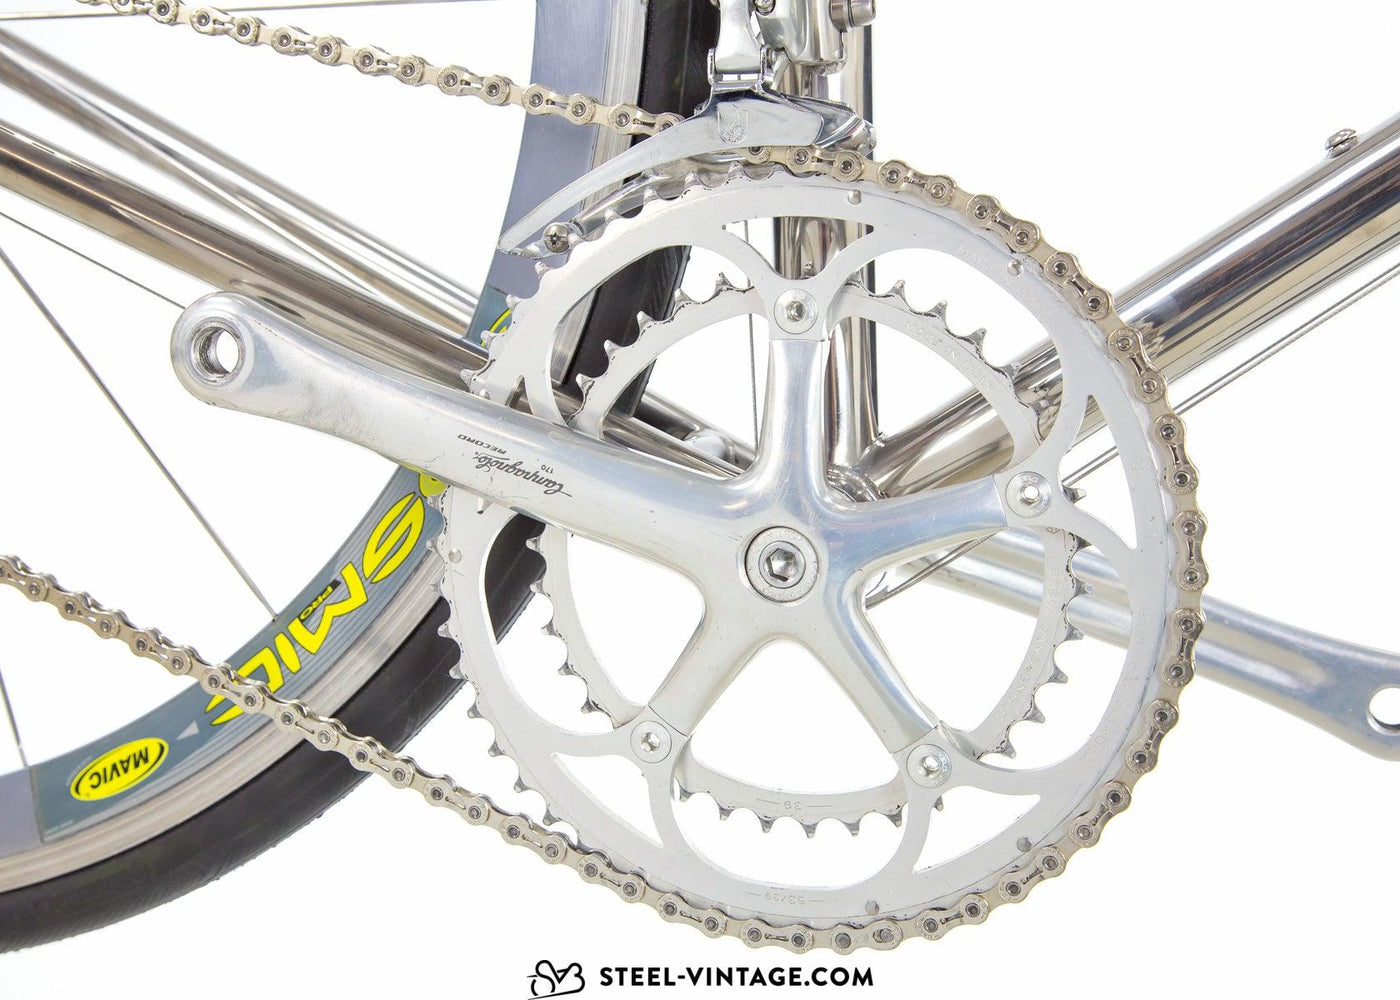 De Rosa Titanio Classic Road Bike 1990s - Steel Vintage Bikes